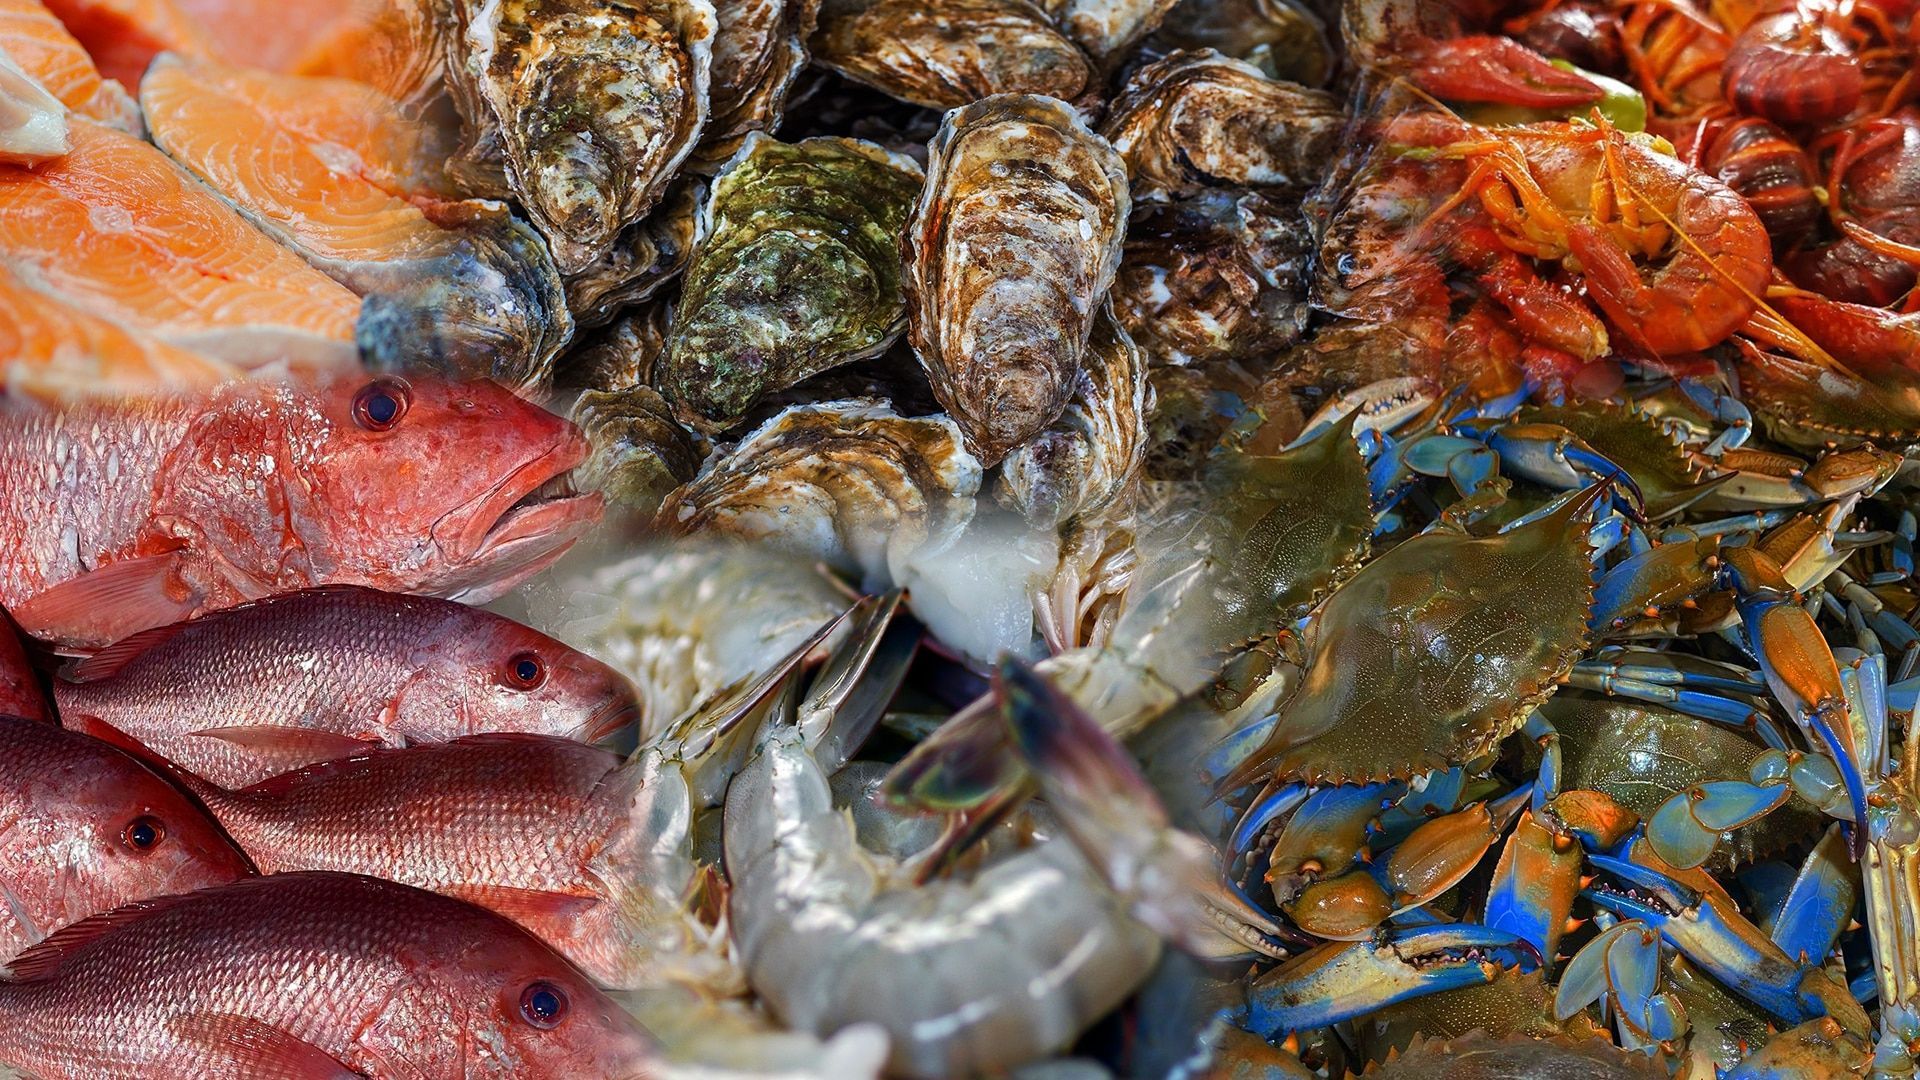 Gulf Shores Seafood News